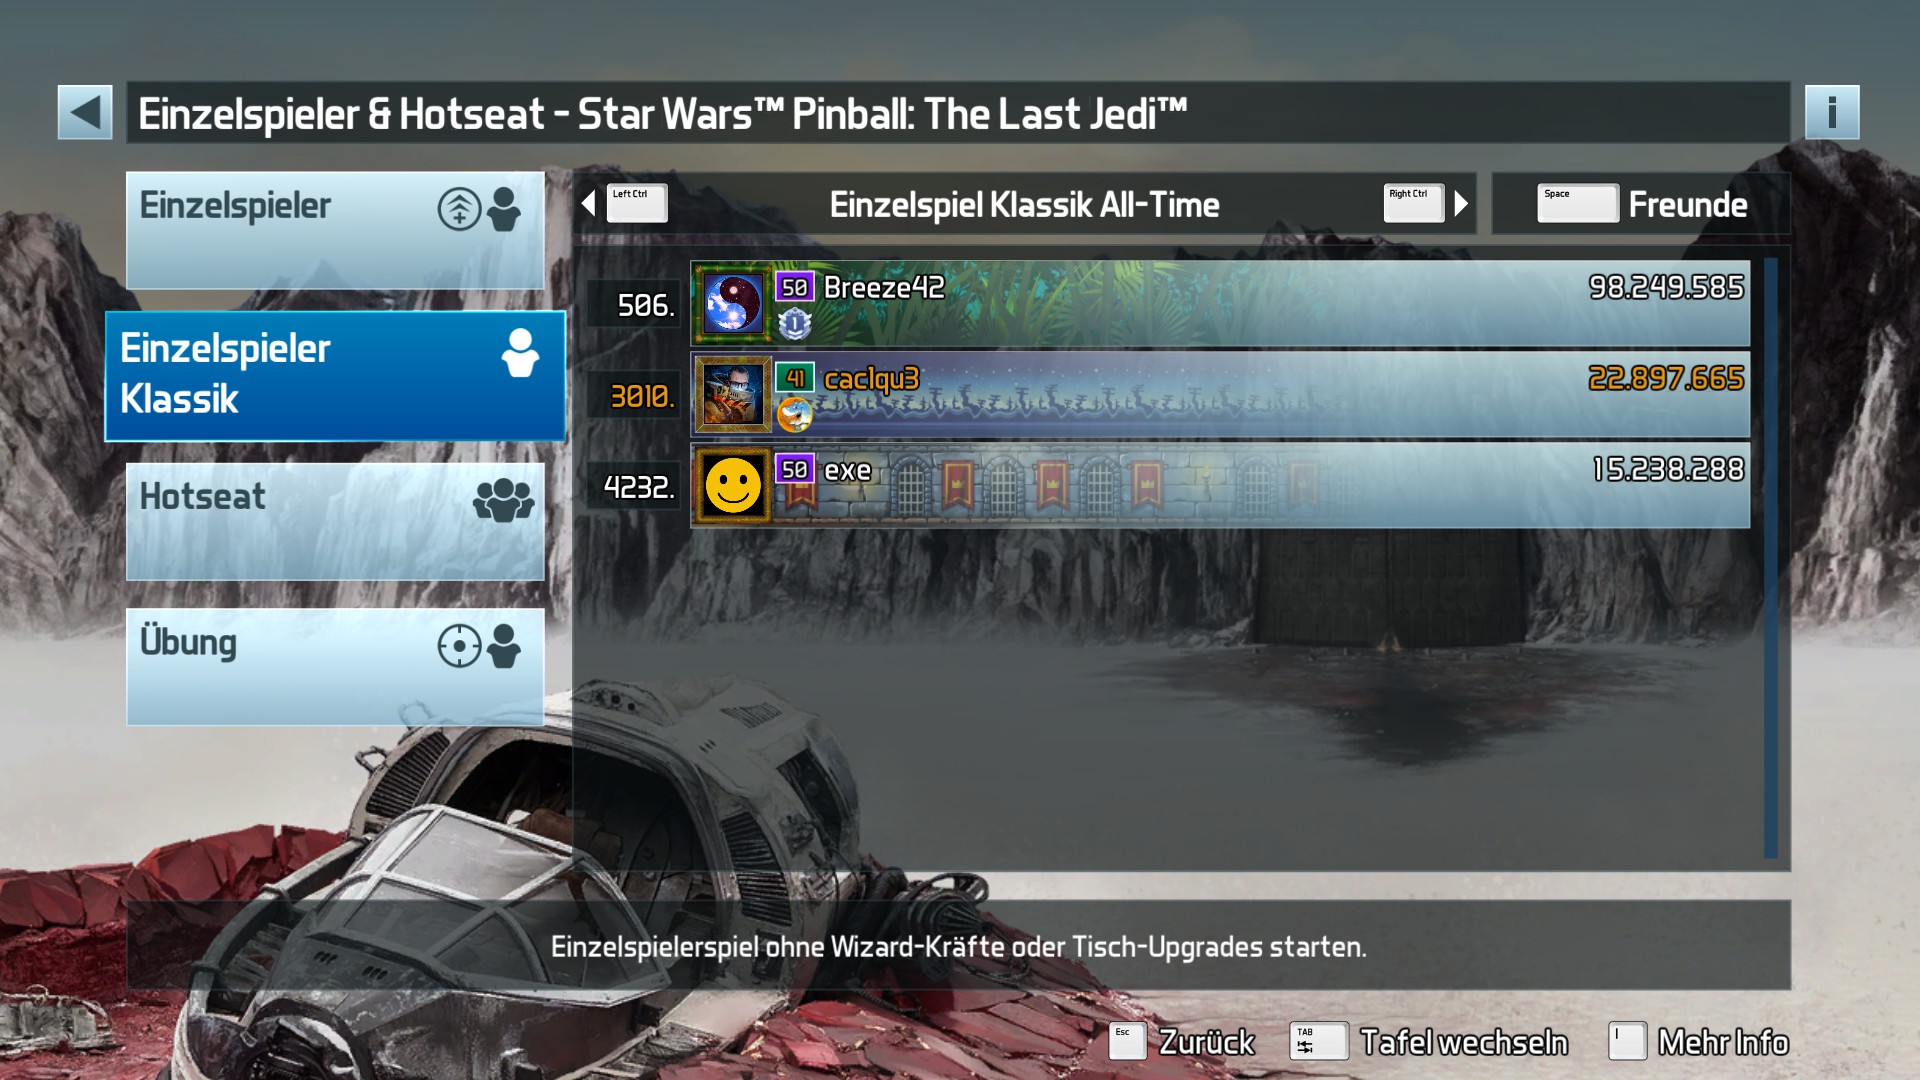 e2e4: Pinball FX3: Star Wars Pinball: The Last Jedi [Classic] (PC) 22,897,665 points on 2022-05-19 02:29:27